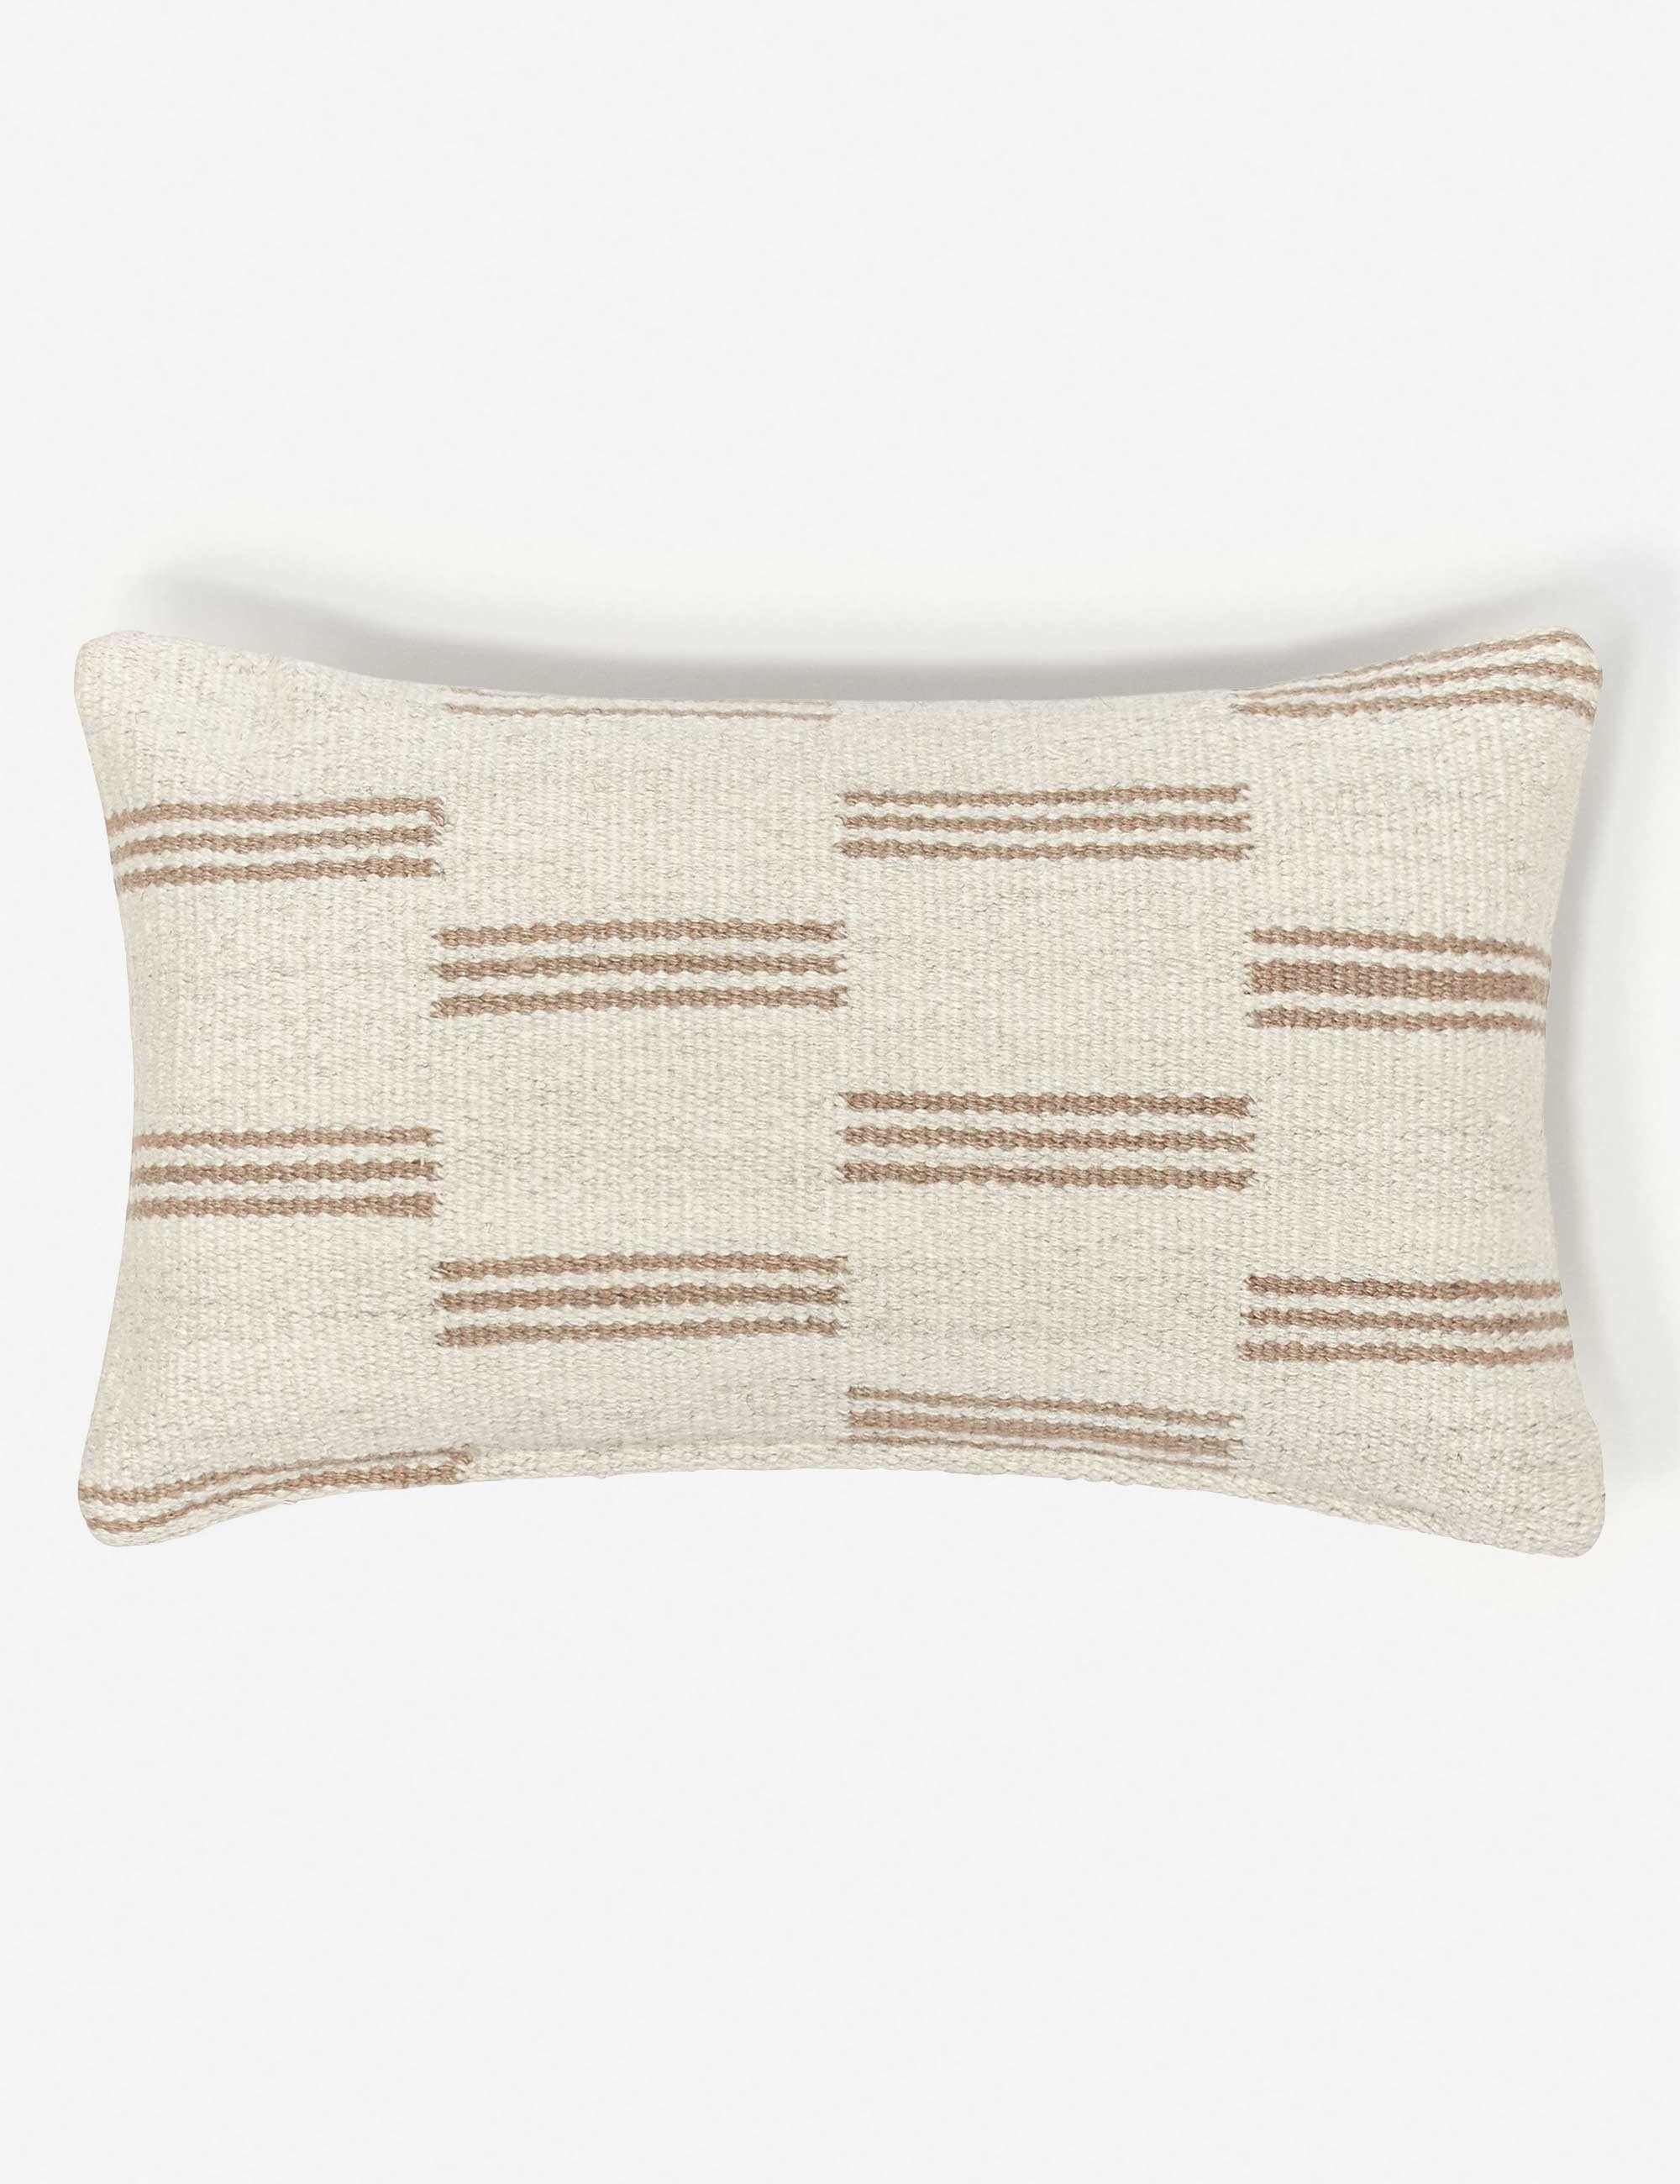 Stripe Break Pillow by Sarah Sherman Samuel - Image 0